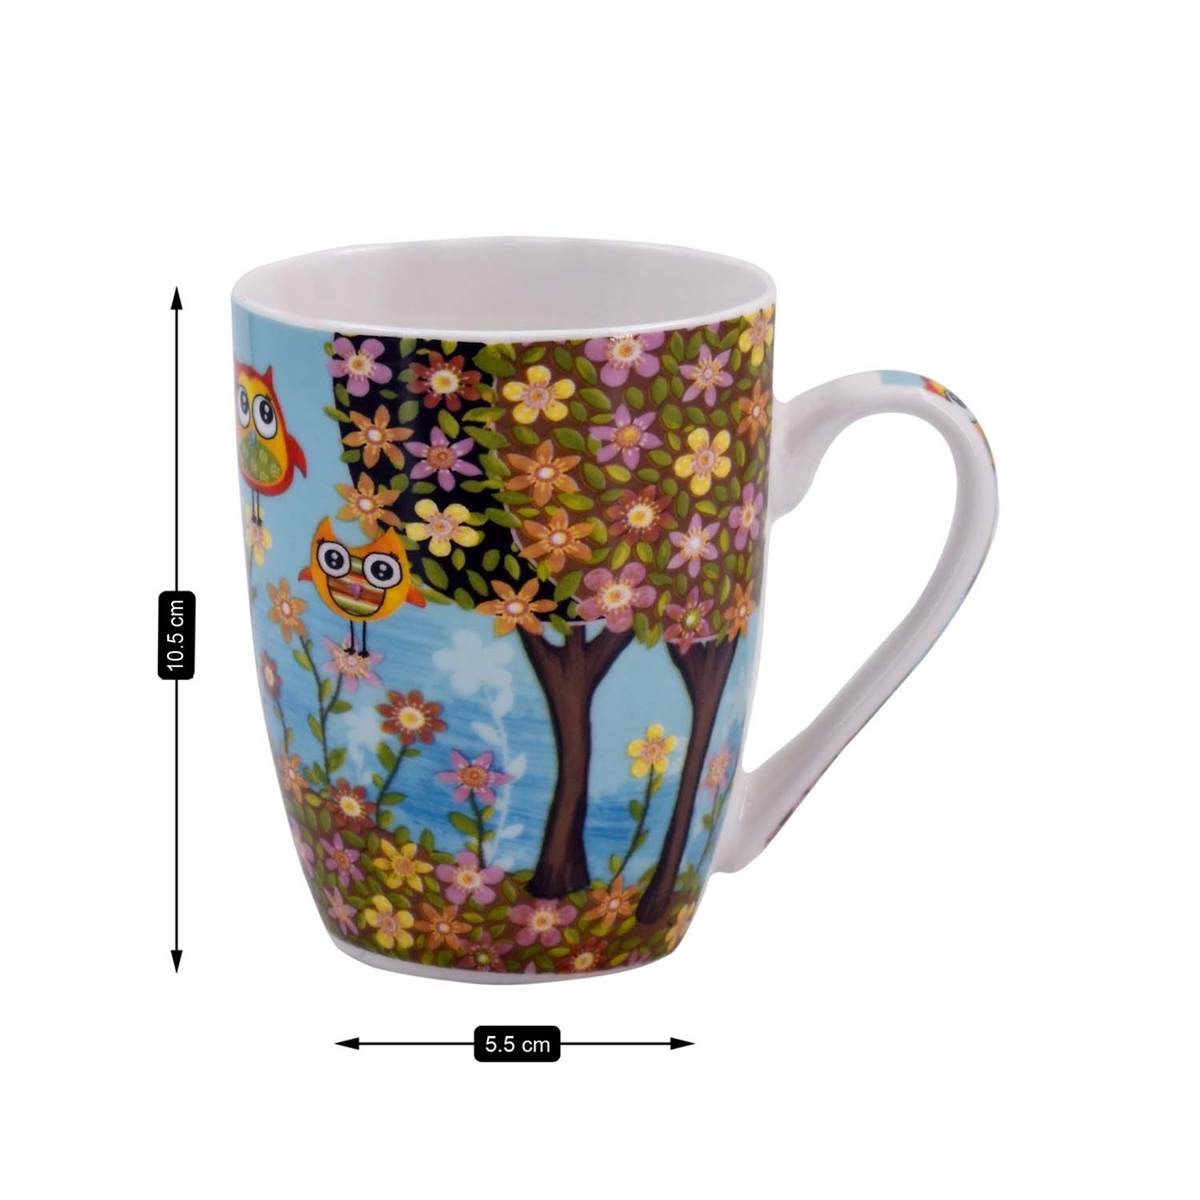 Printed Ceramic Coffee or Tea Mug with handle - 325ml (2904G-A)